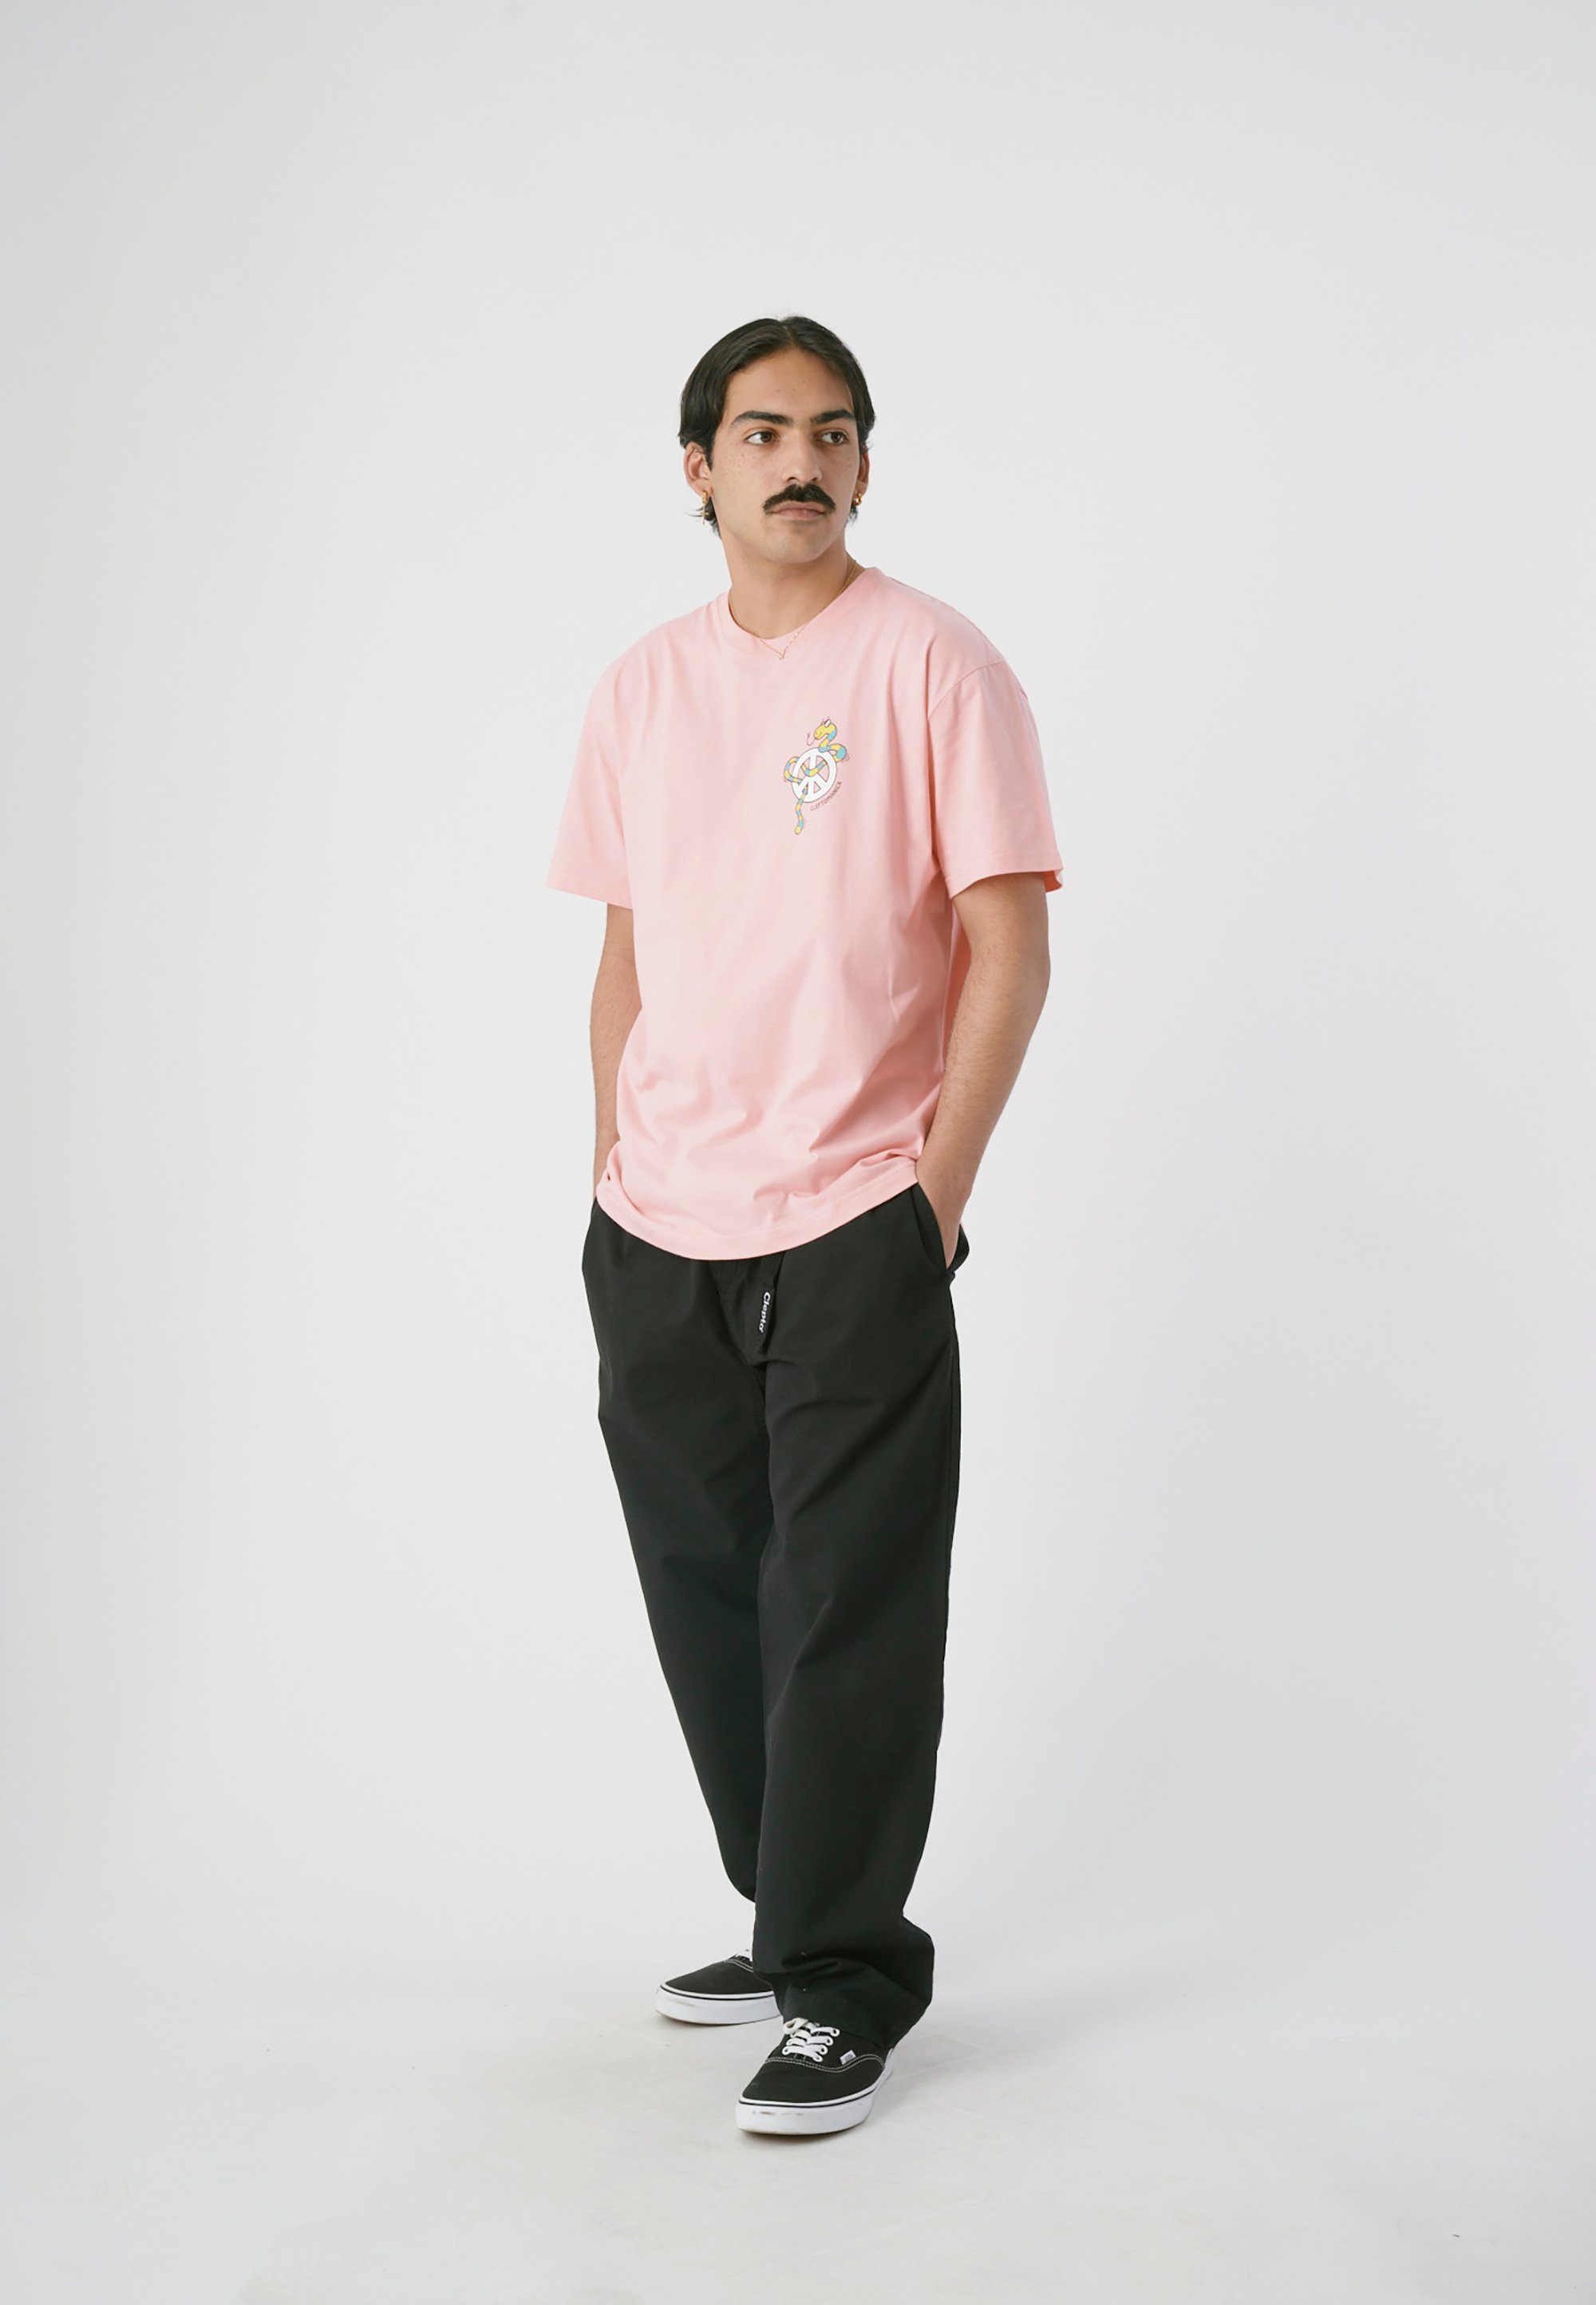 lockerem Blind rosa Cleptomanicx T-Shirt mit Snake Schnitt